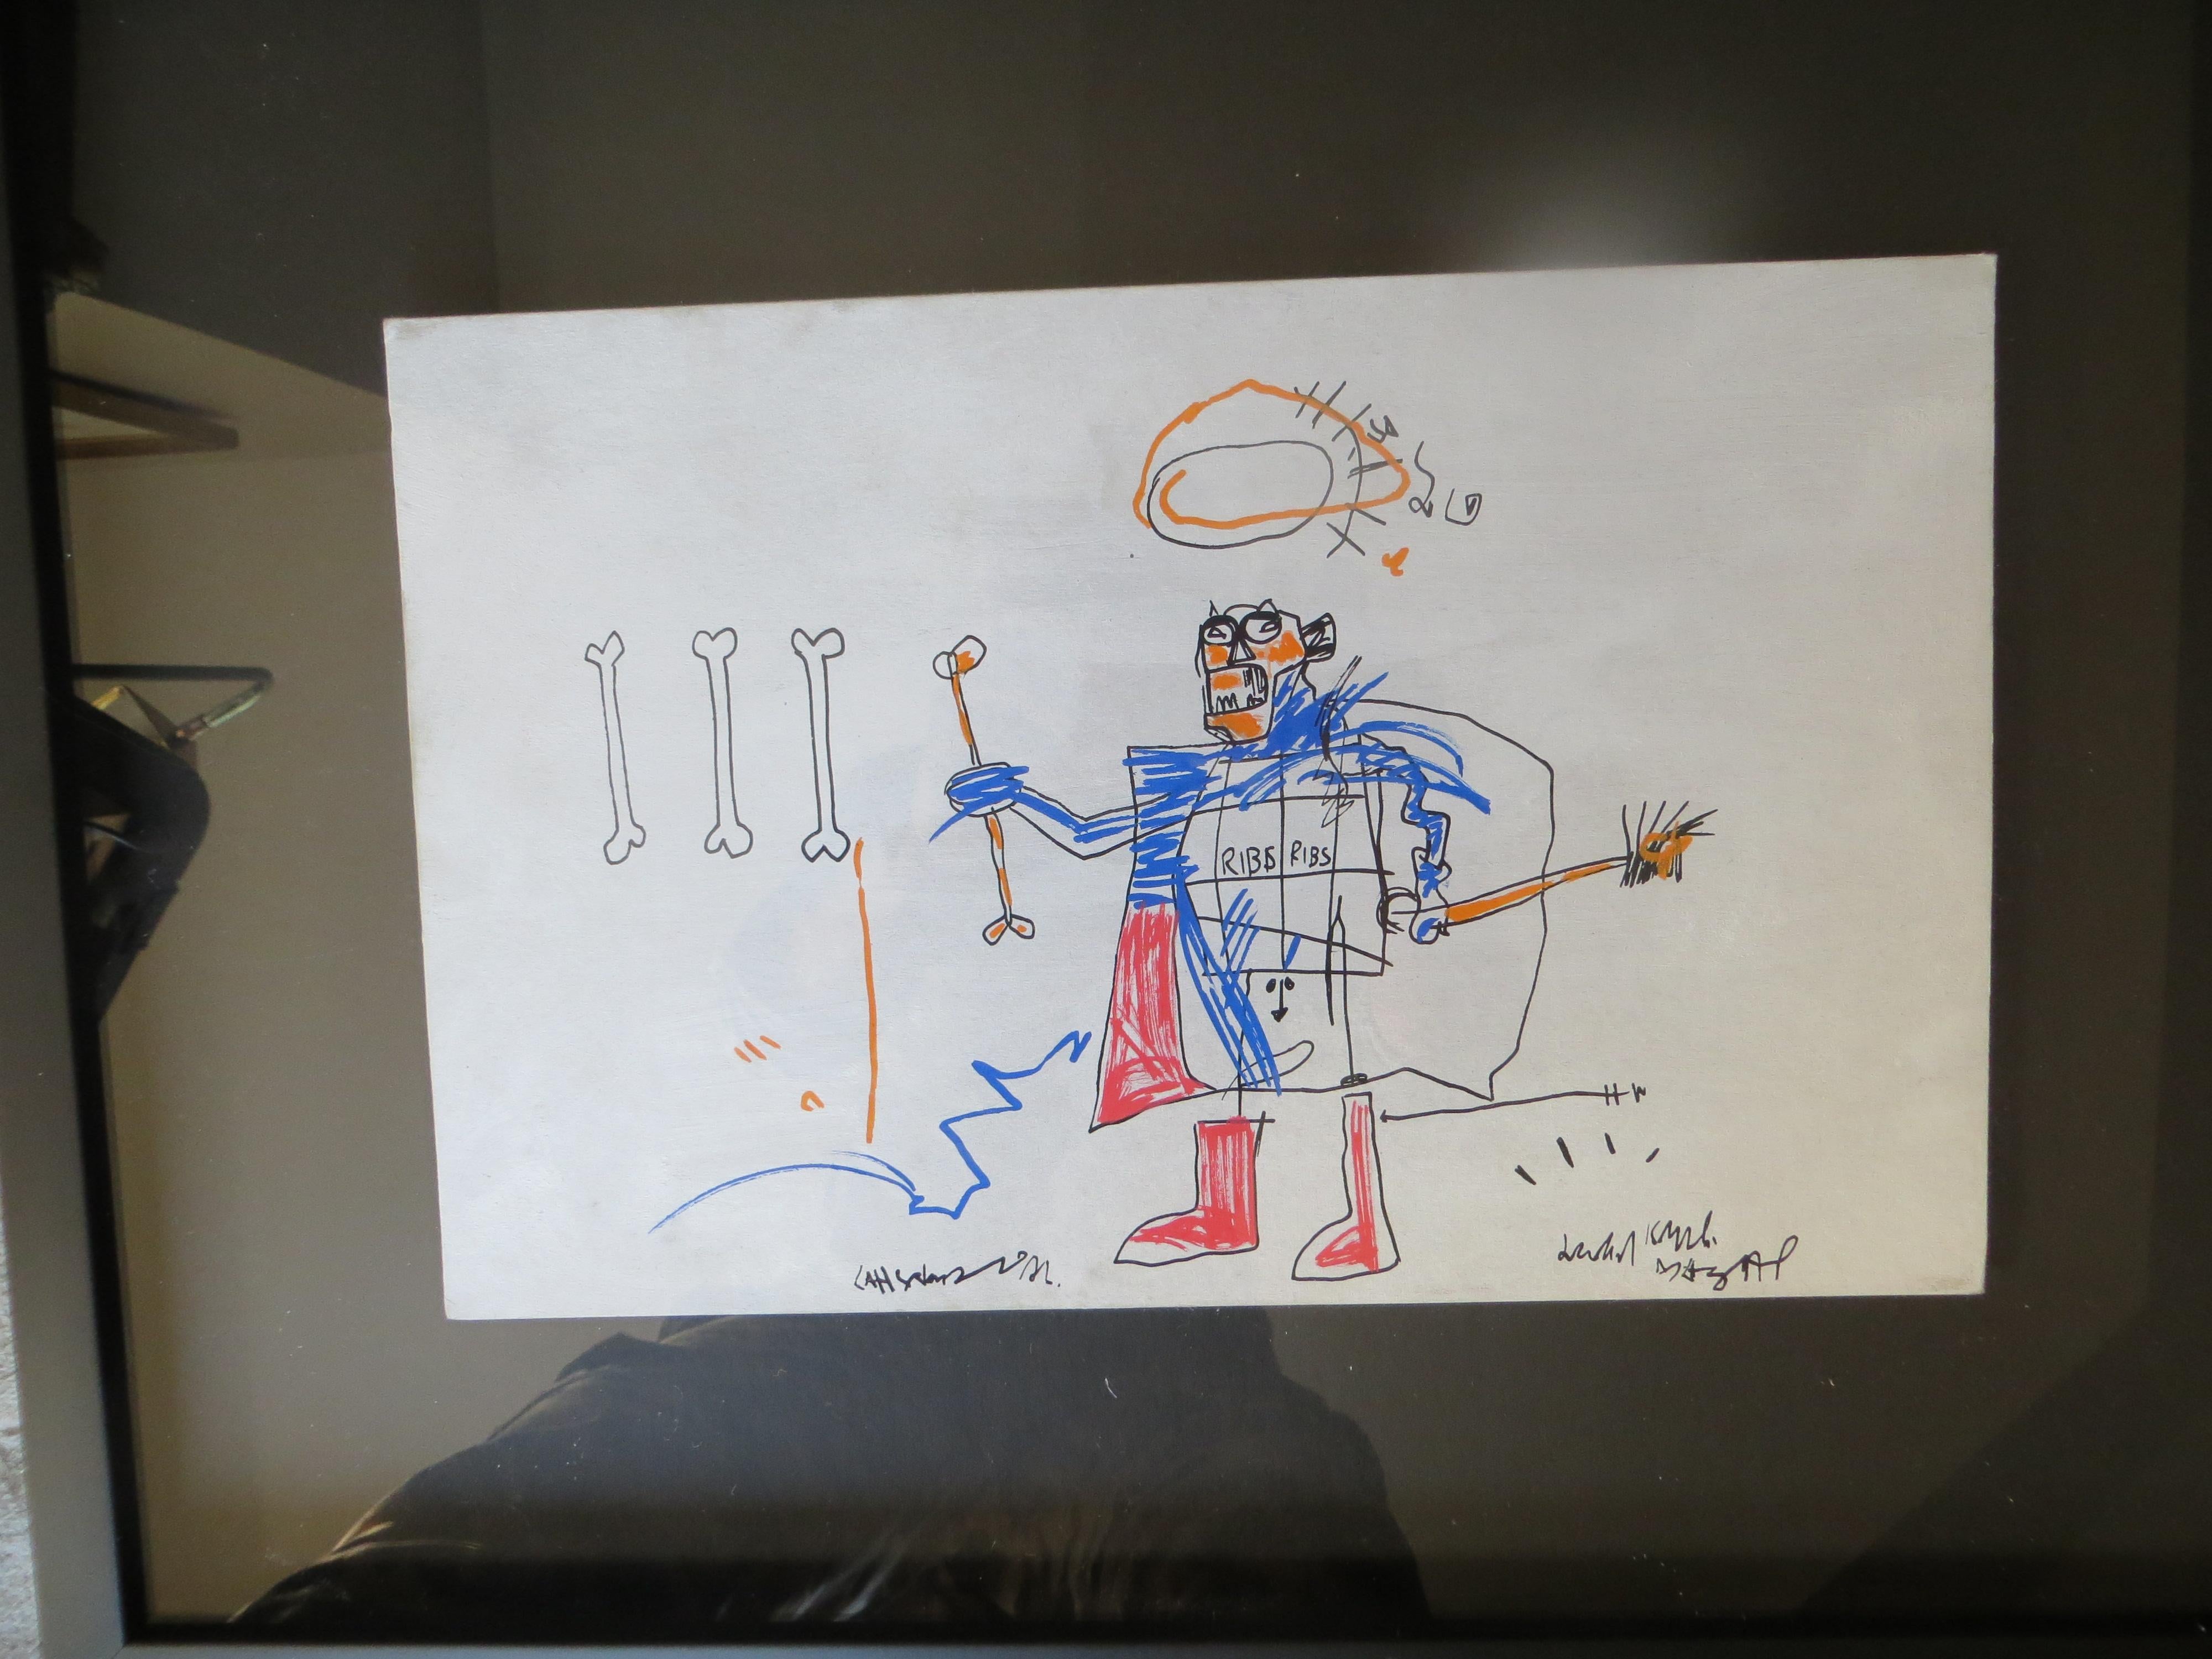 « Ribs, Ribs », technique mixte d'après Jean Michel Basquiat  - Art urbain Print par after Jean-Michel Basquiat